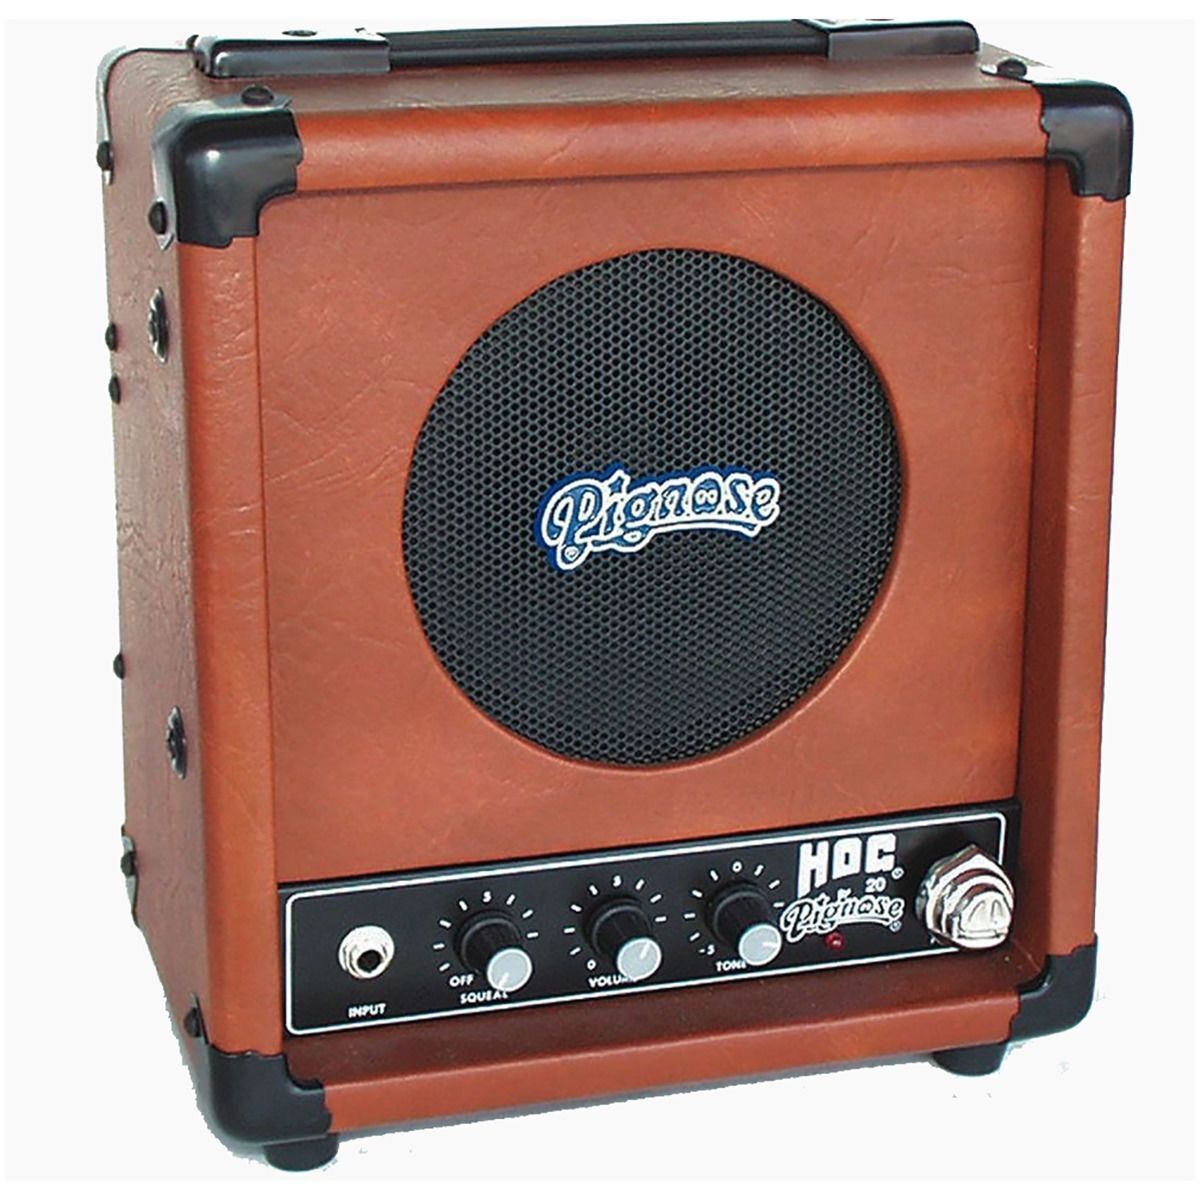 Pignose 7-200 HOG 20 Portable Rechargeable Battery Powered Guitar Amplifier